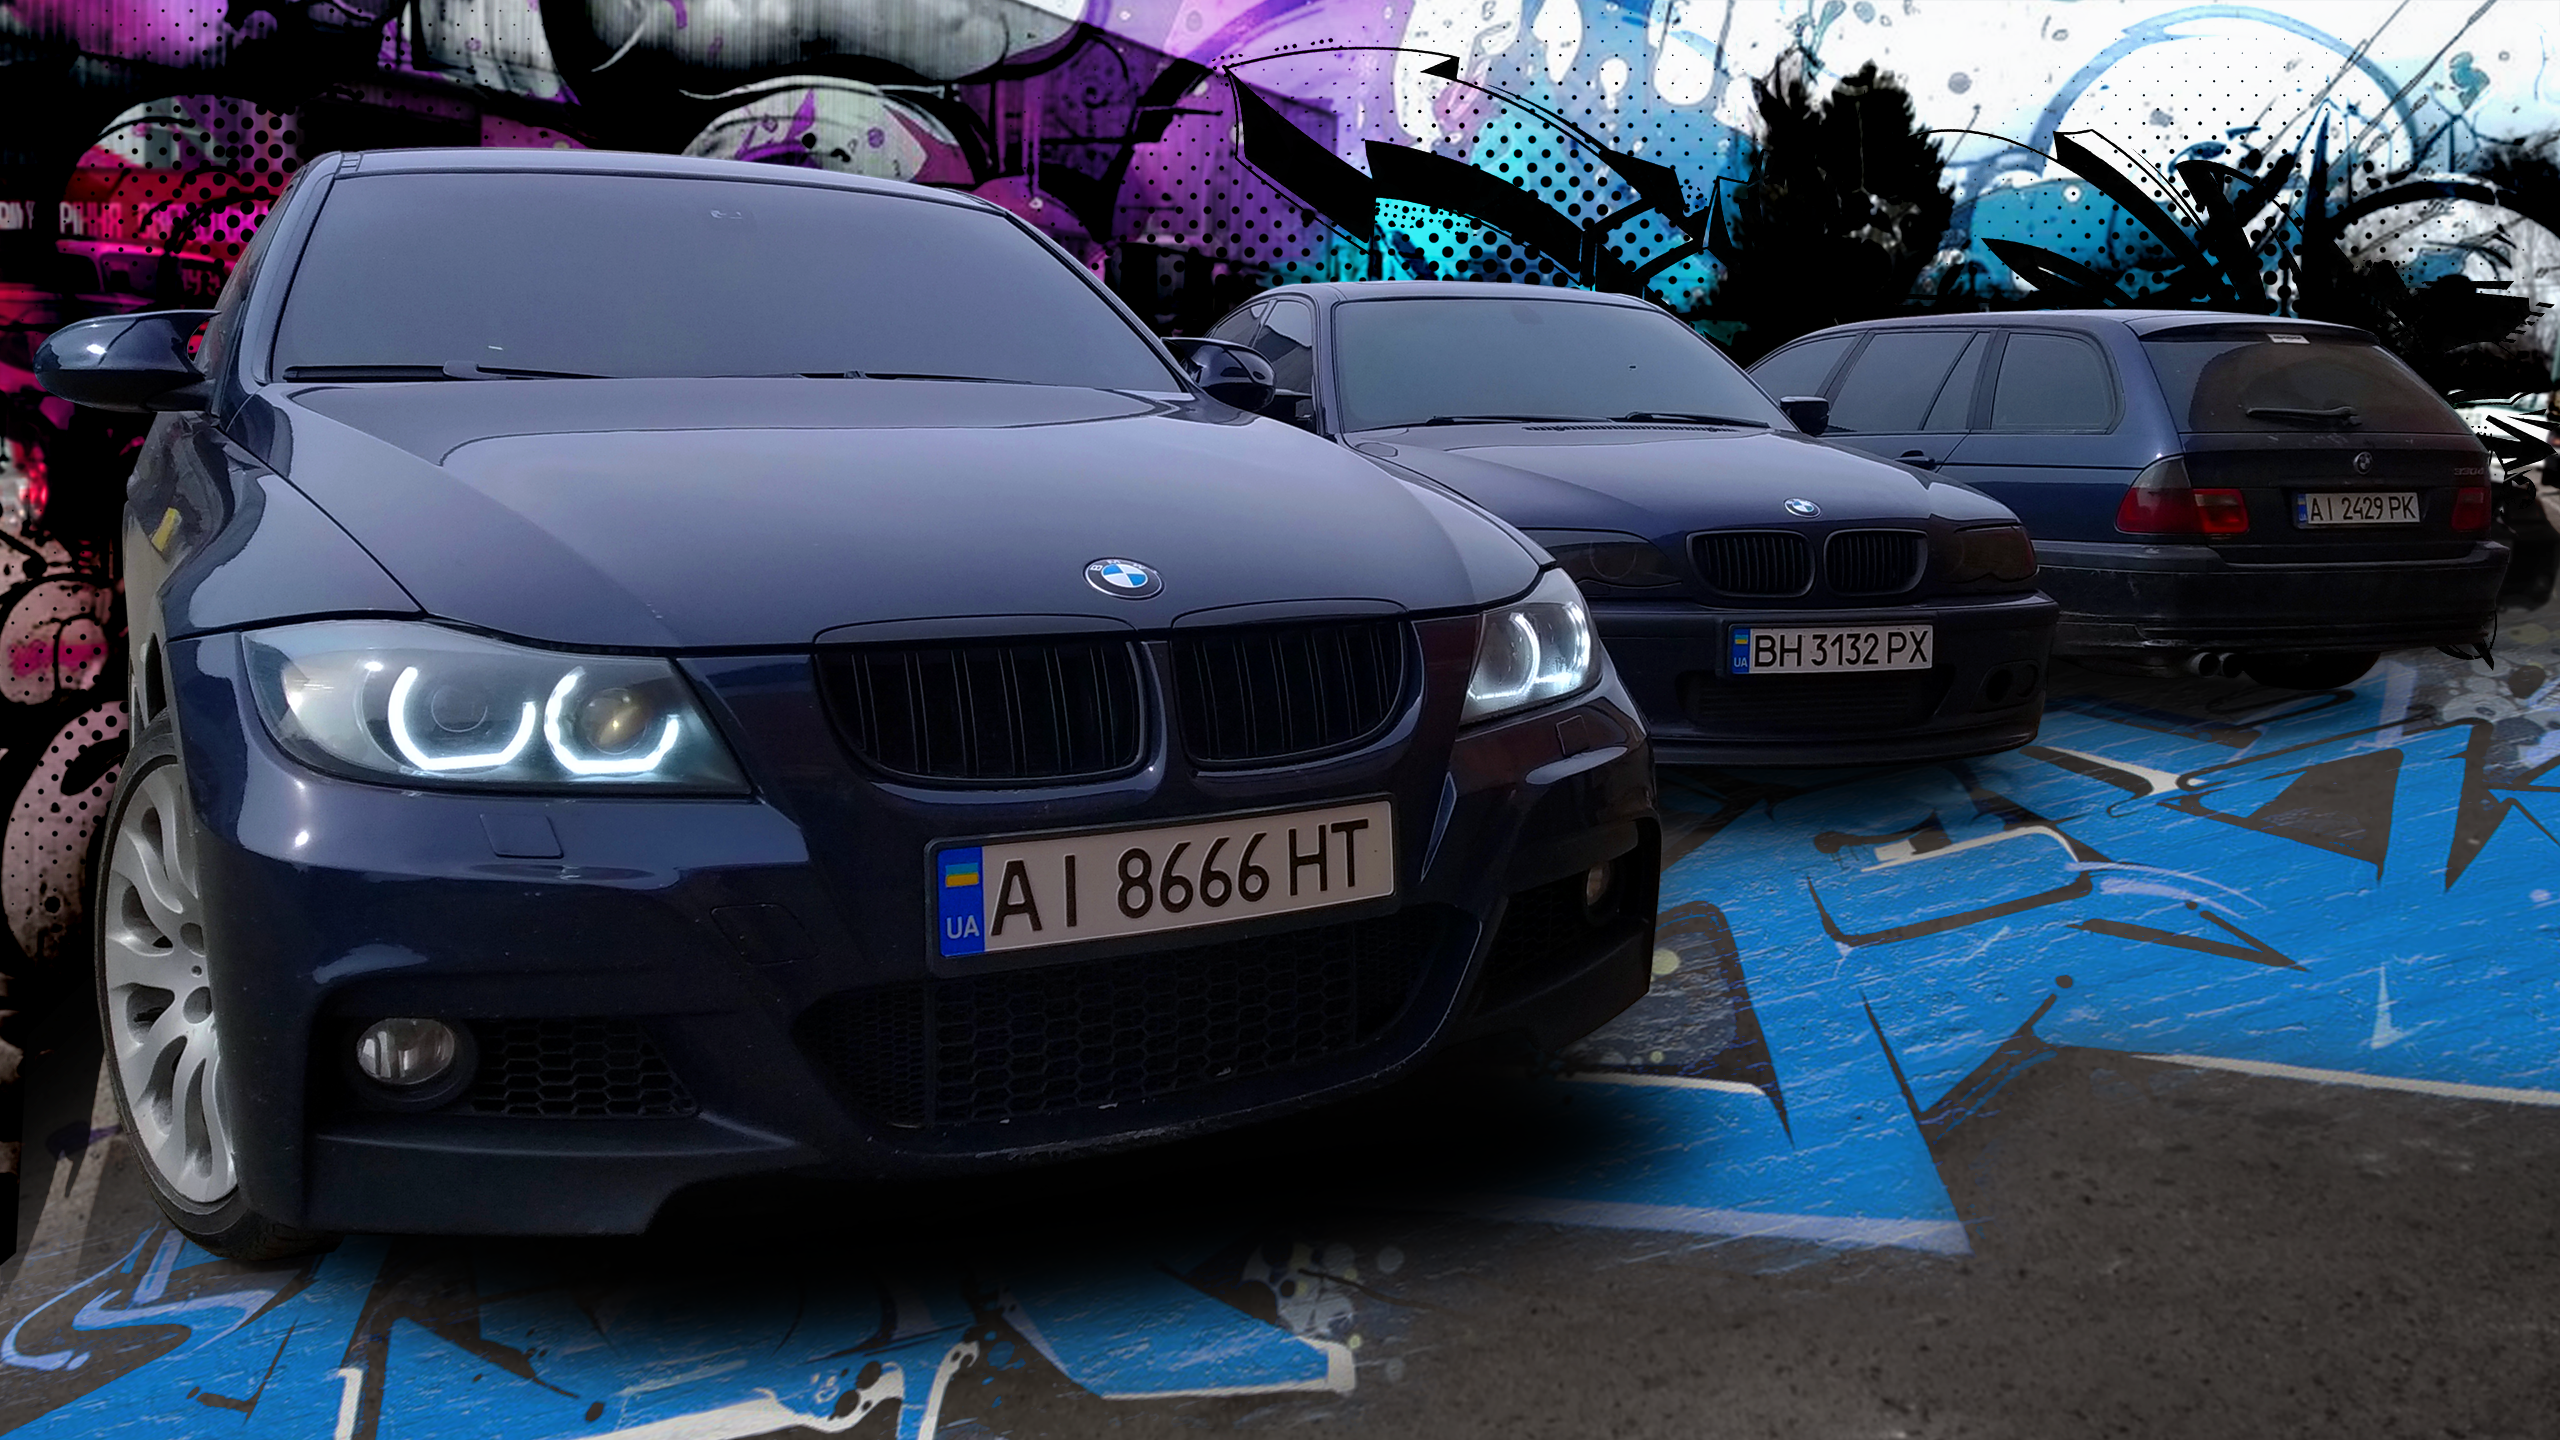 General 2560x1440 BMW vehicle car BMW E90 BMW E46 blue graffiti street art